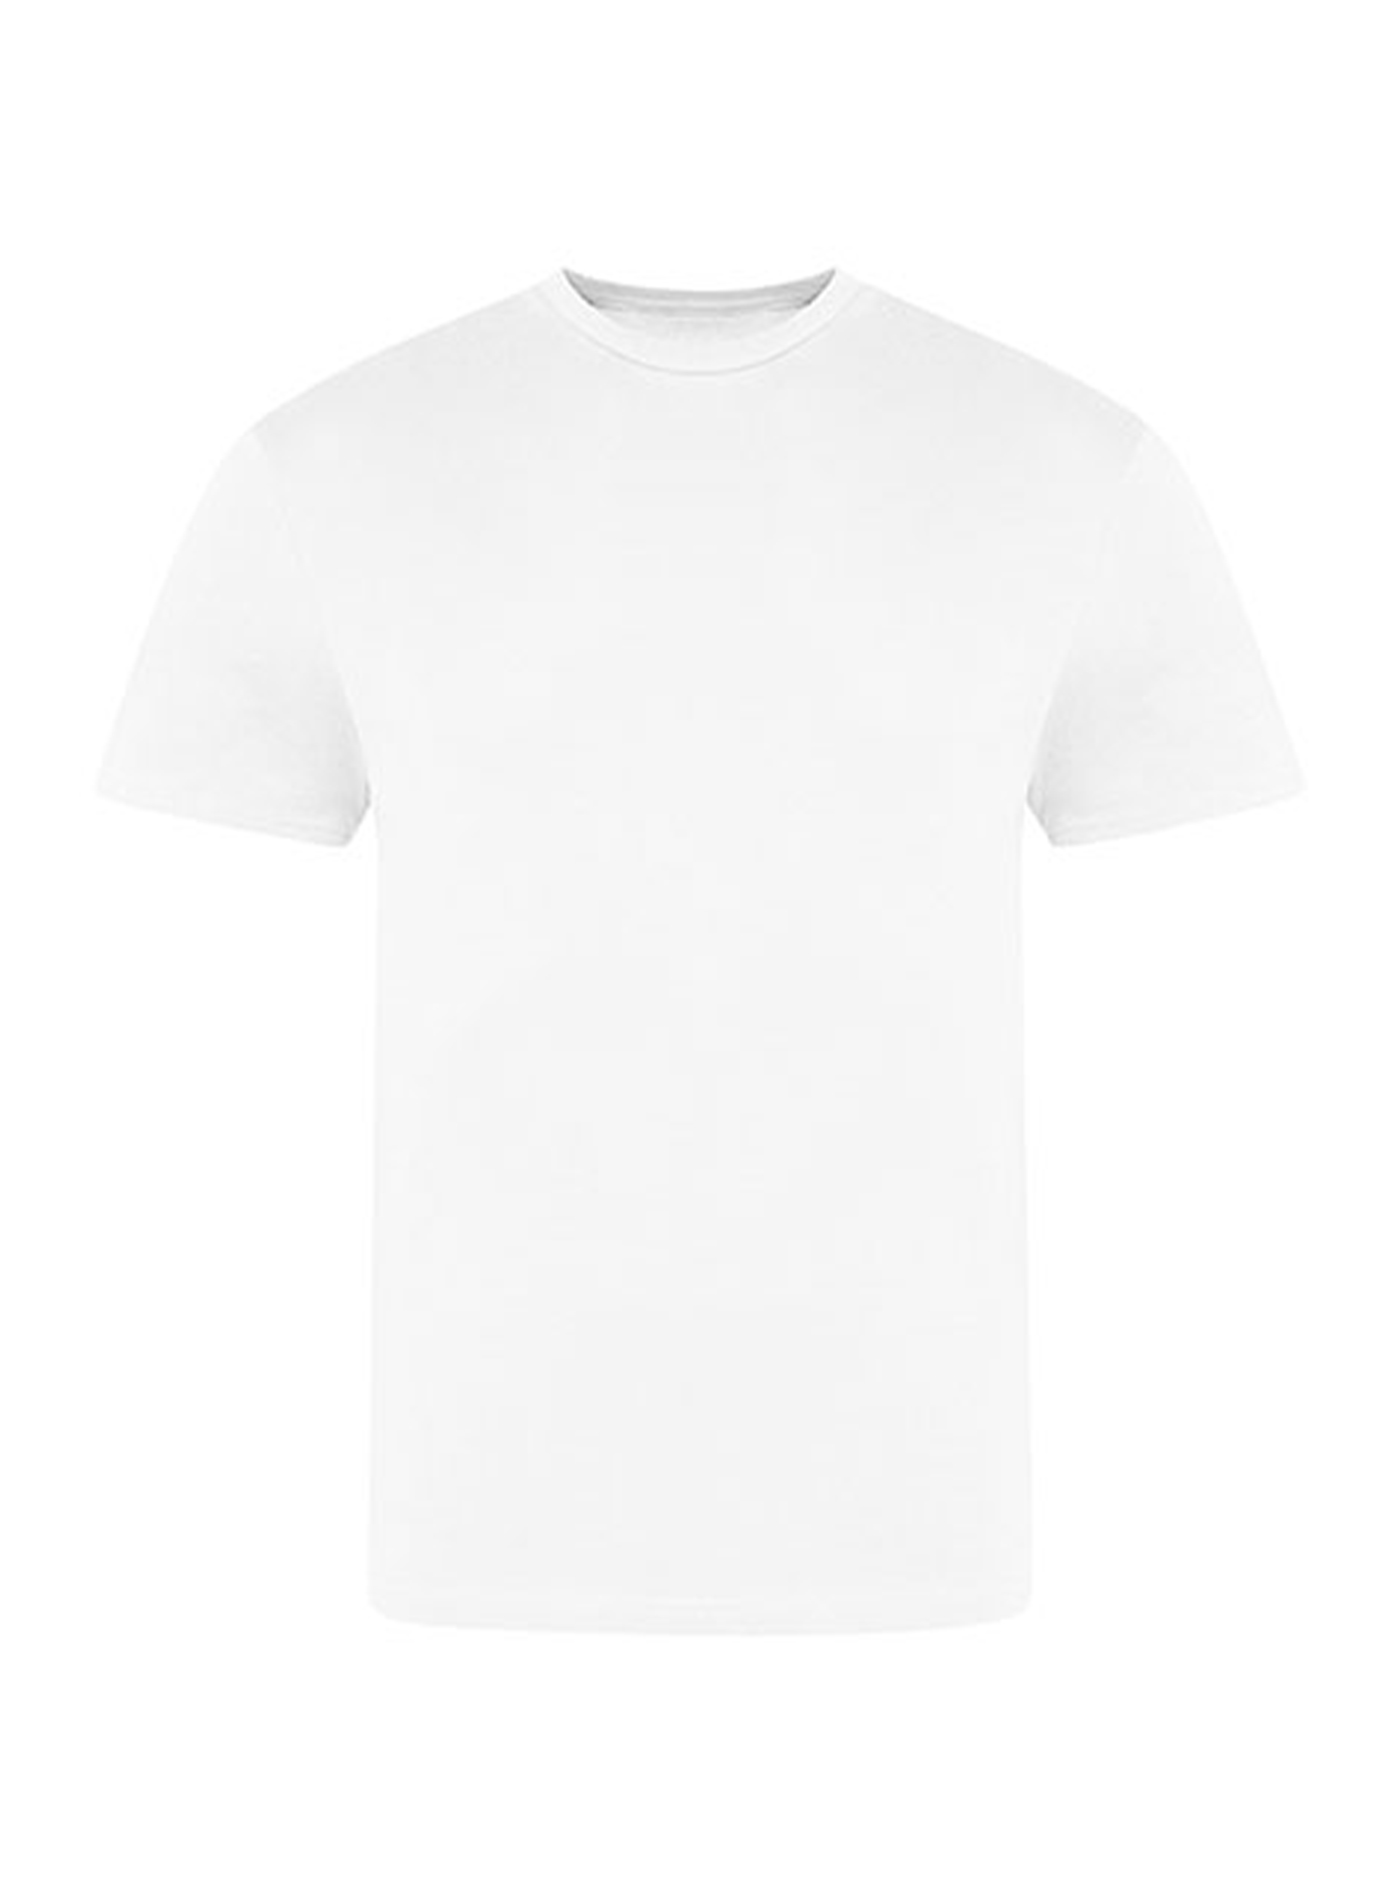 Pánské tričko Just Ts - Bílá M